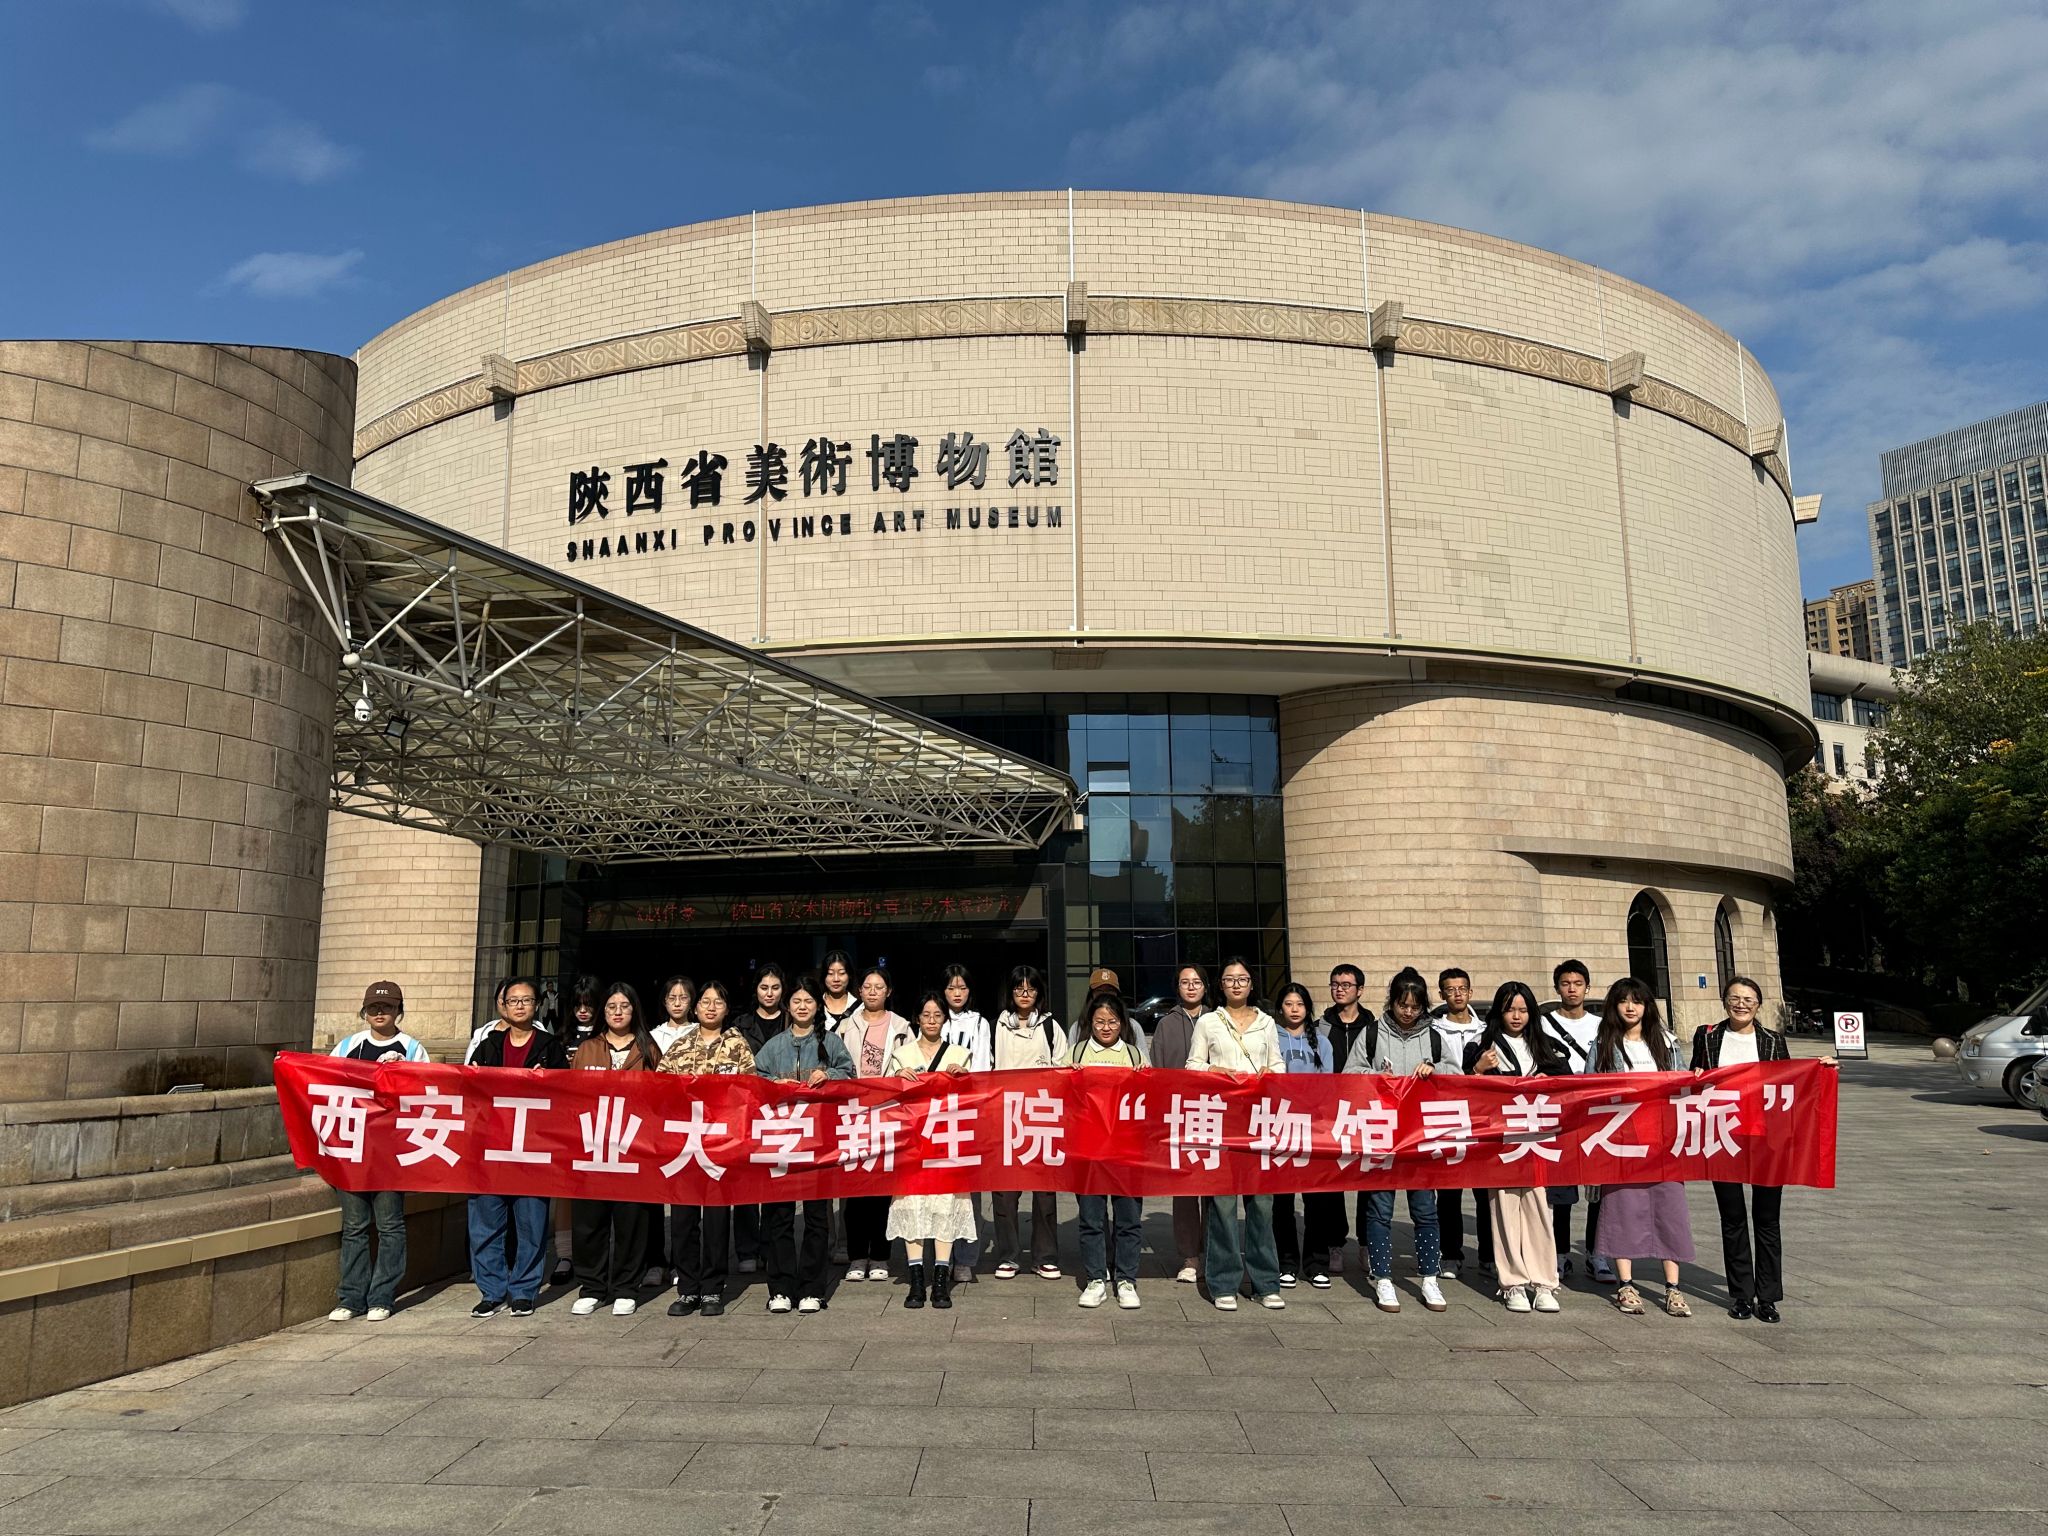 beat365中国在线体育开展“博物馆寻美之旅”系列活动